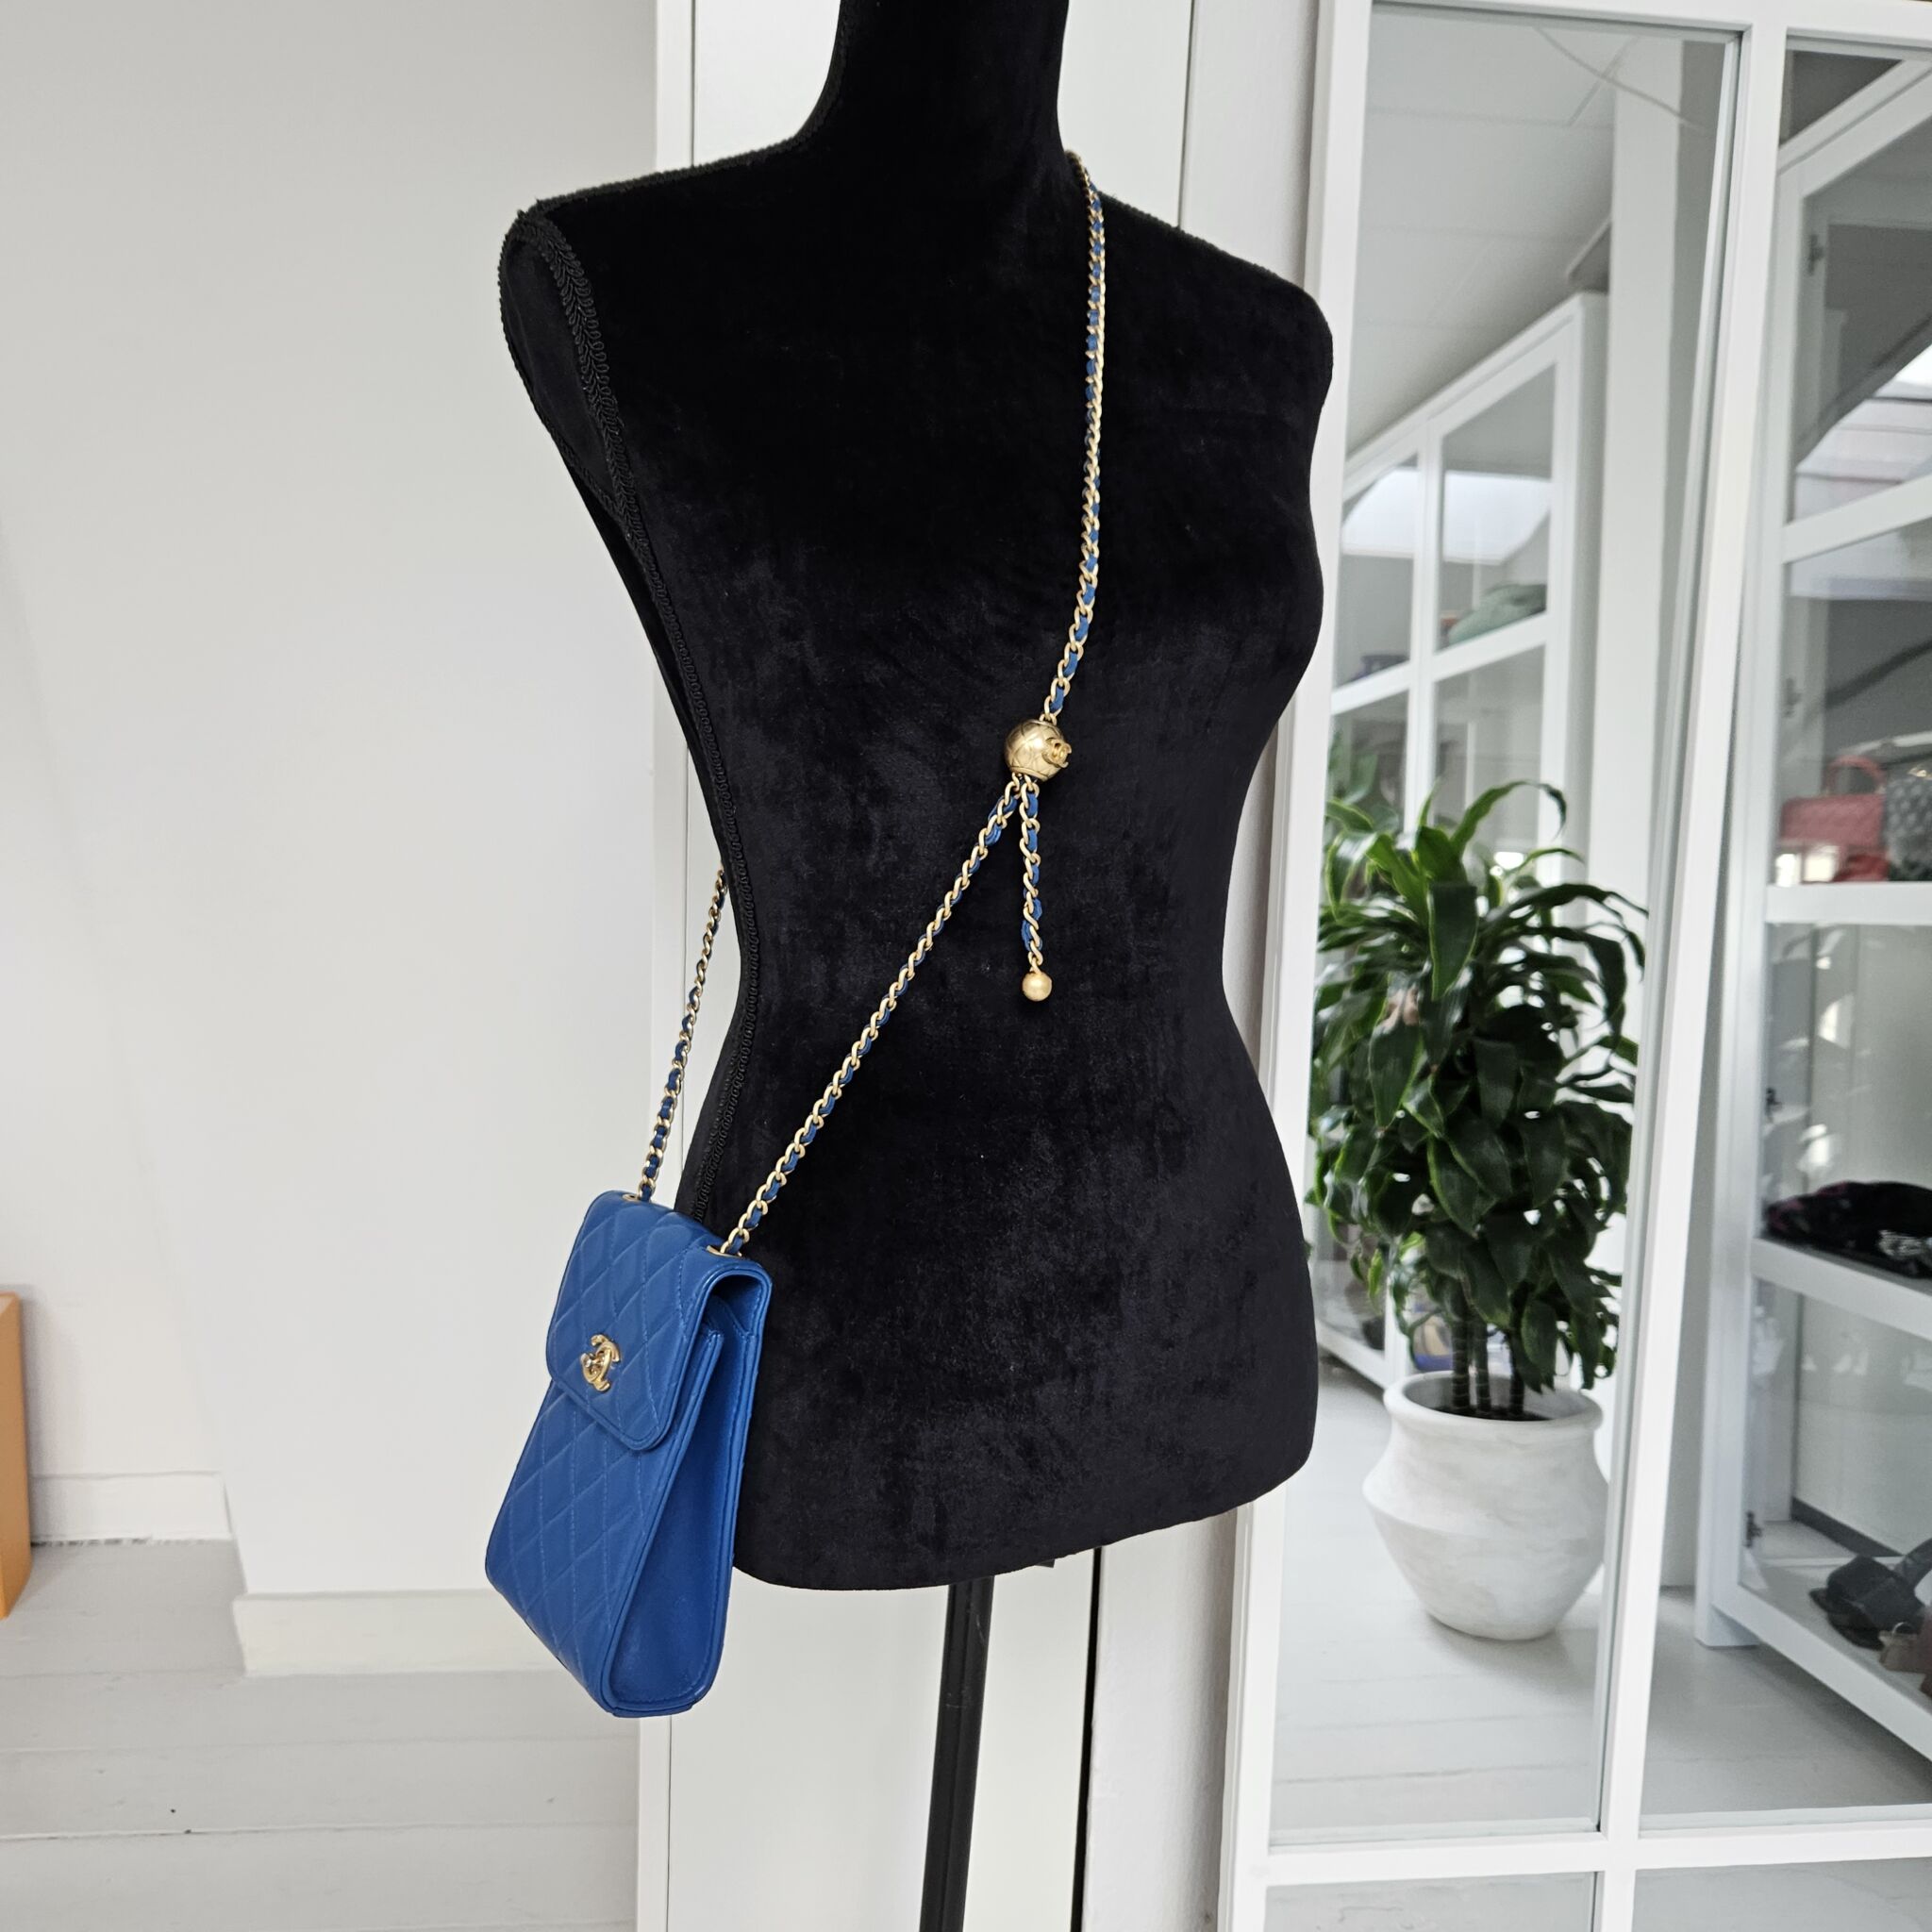 Chanel Pearl Crush Phone Bag, Lambskin, Blue GHW - Laulay Luxury